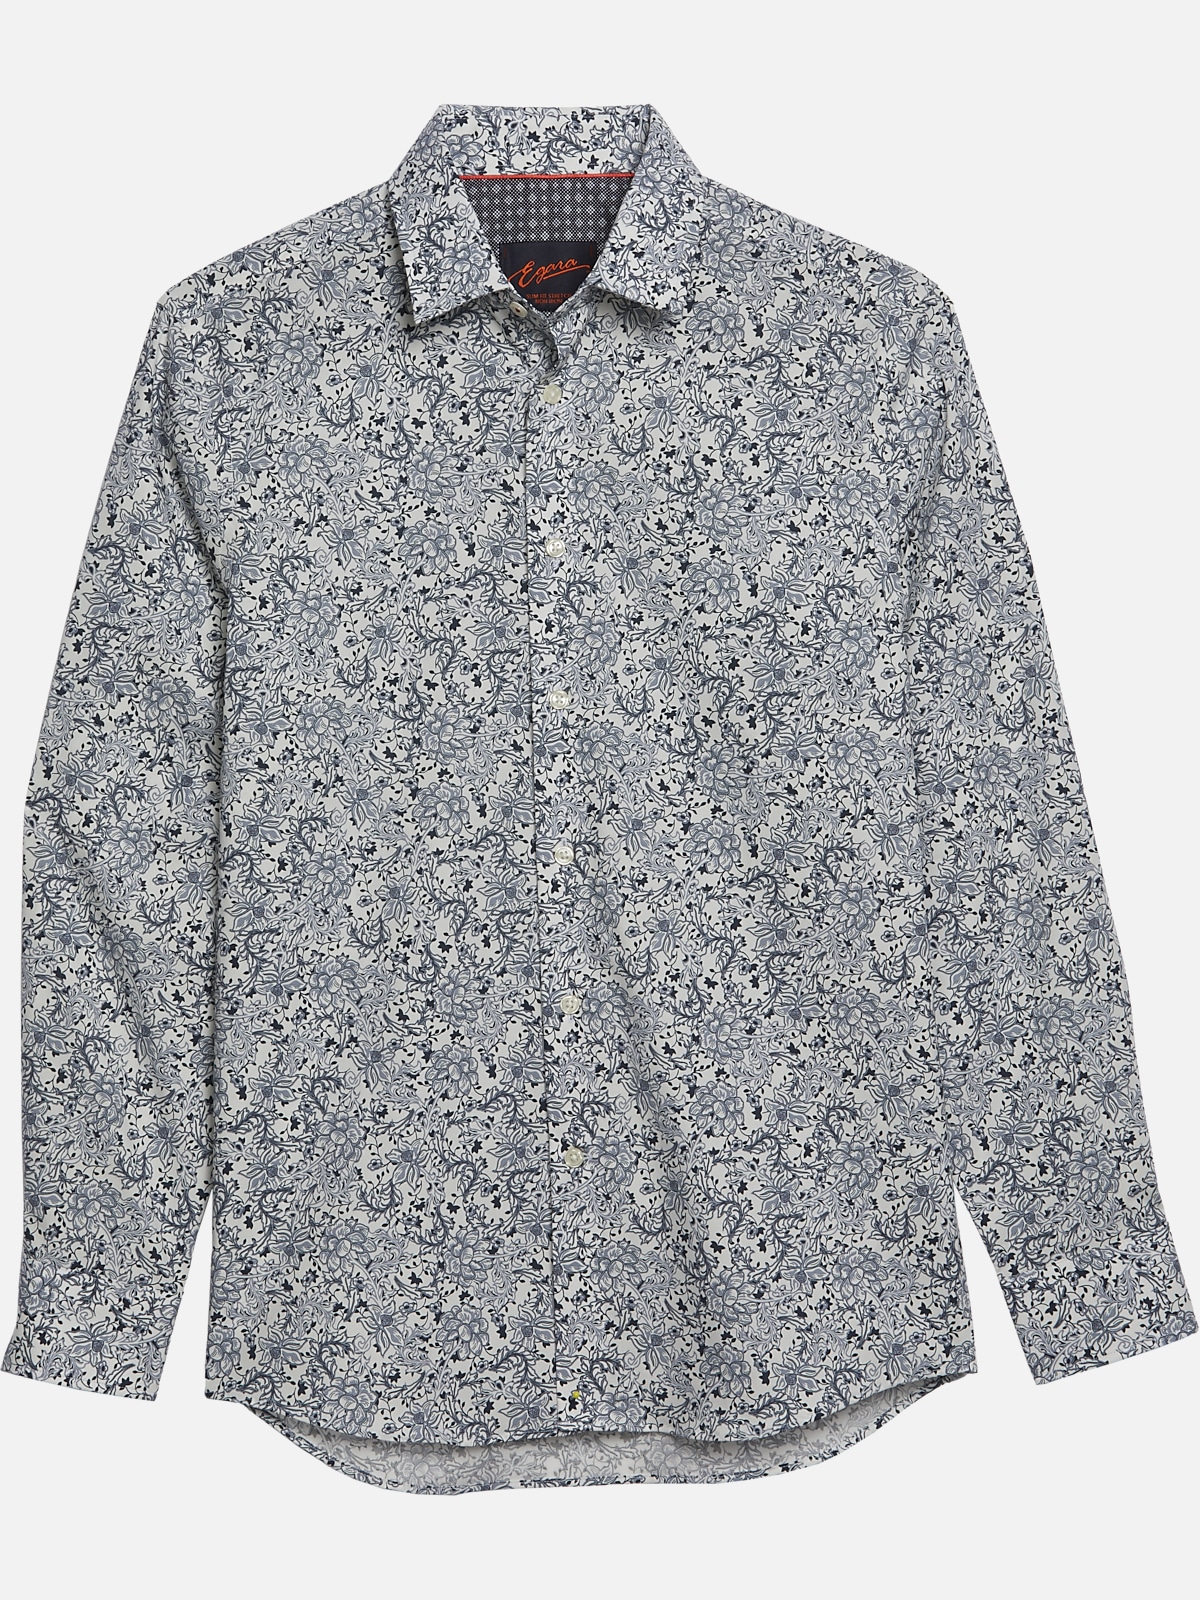 Egara Slim Fit Floral Sport Shirt | All Clearance $39.99| Men's Wearhouse